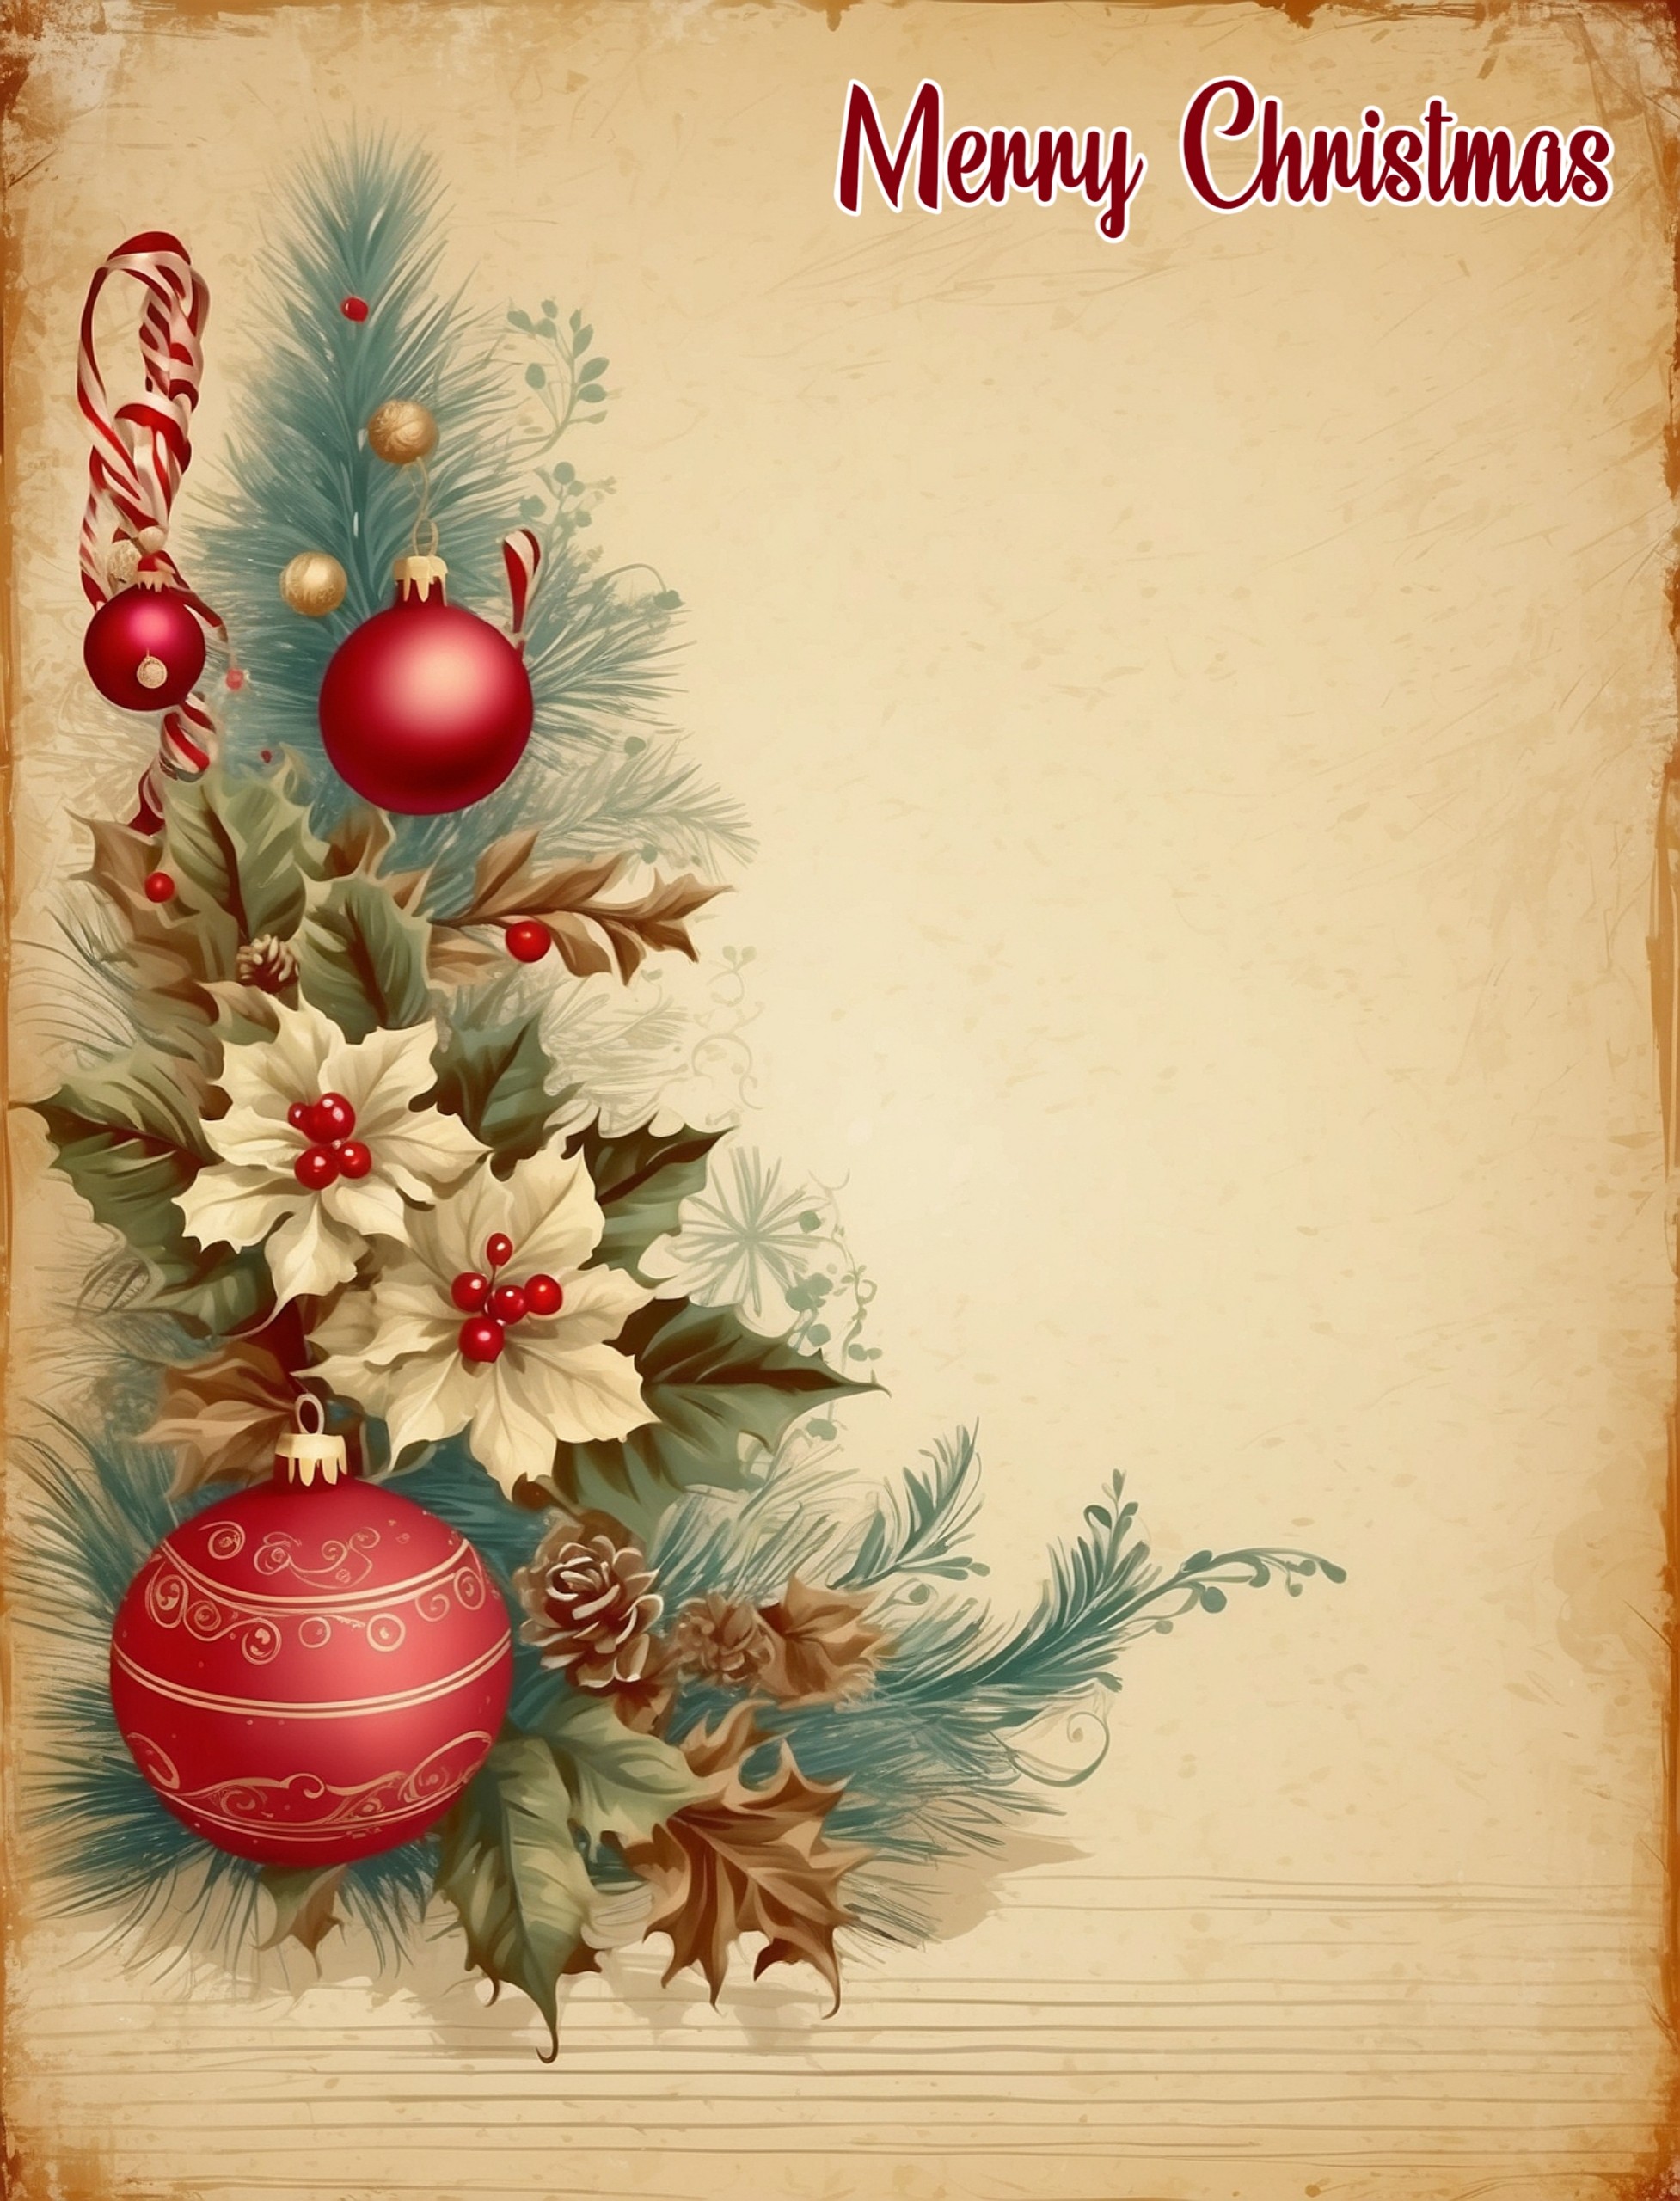 Christmas Background Vintage Image